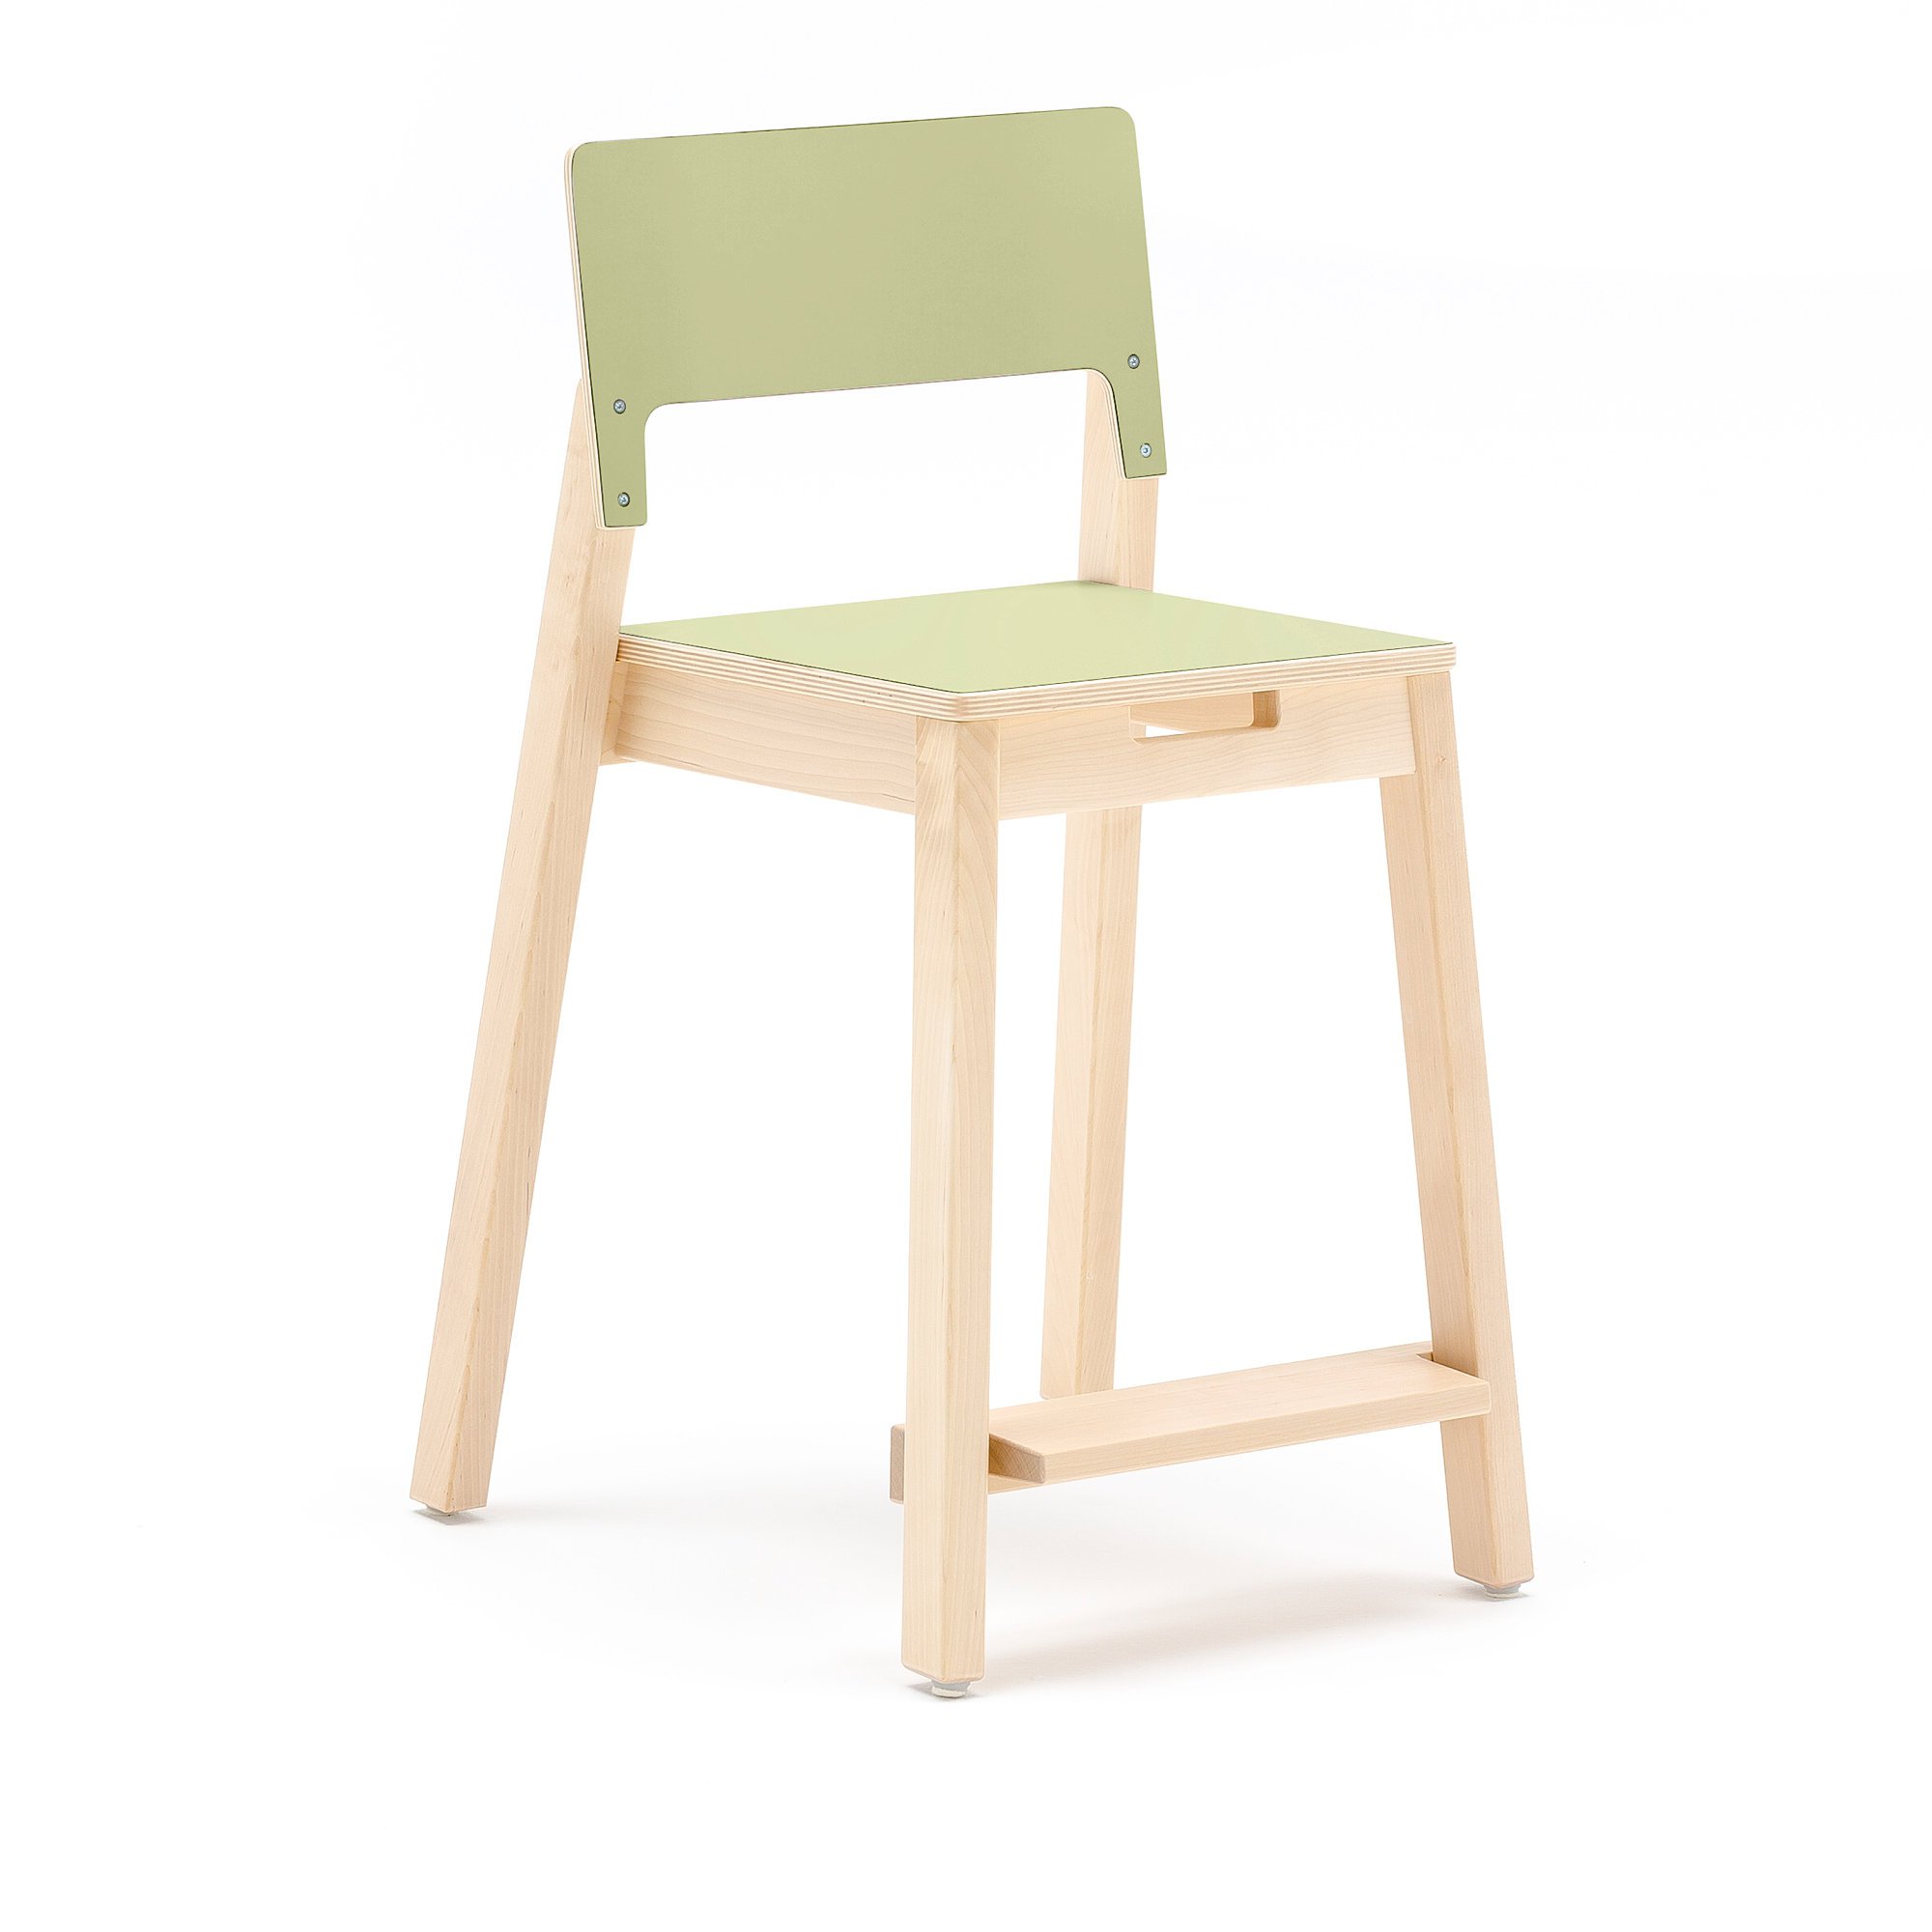 Tall children's chair LOVE, H 500 mm, birch, green laminate